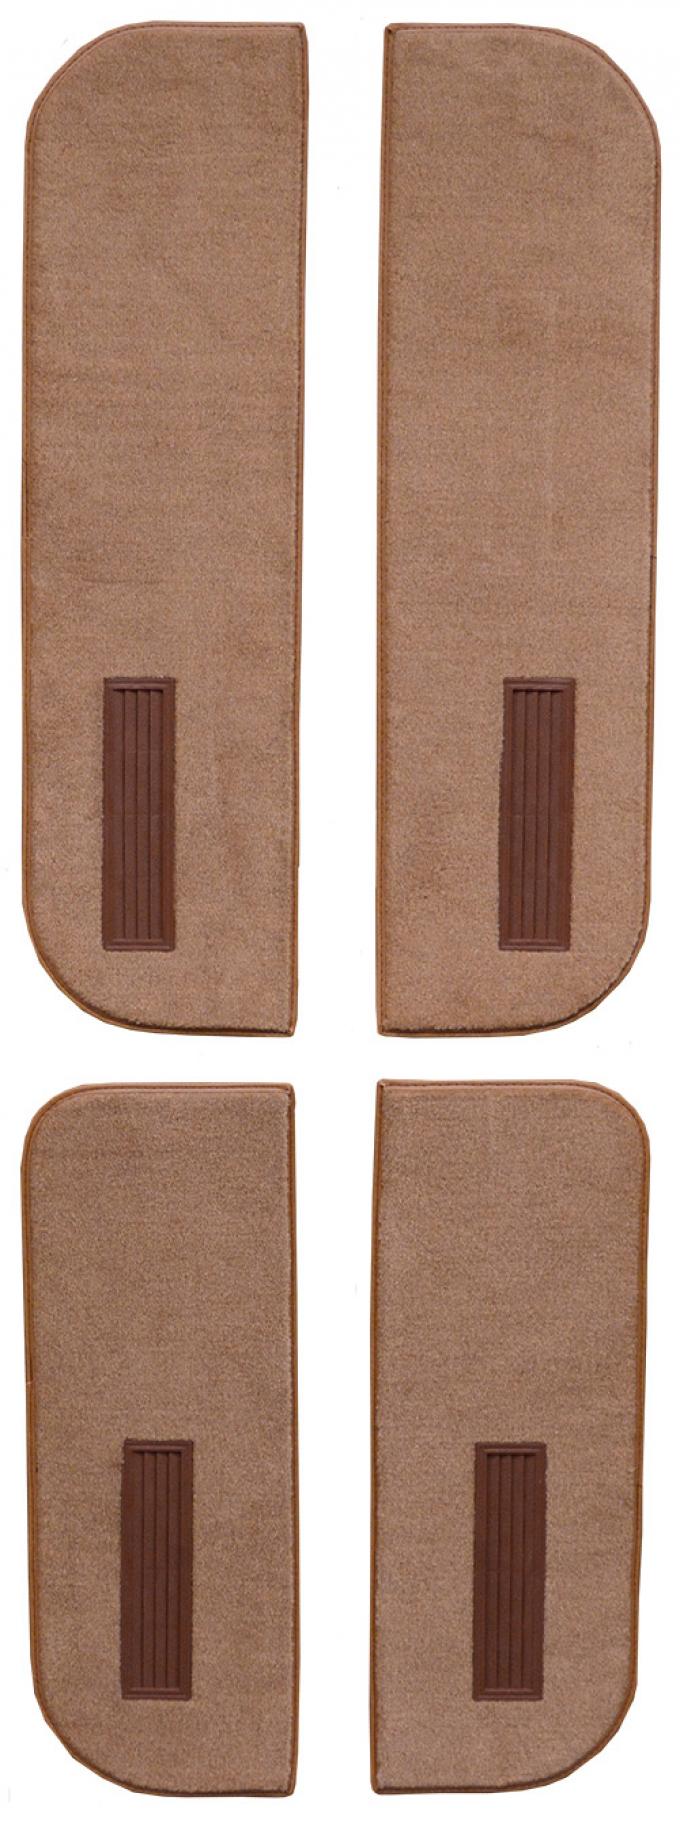 ACC 1981-1986 GMC K1500 Suburban Door Panel Inserts on Cardboard w/Vents 4pc Cutpile Carpet